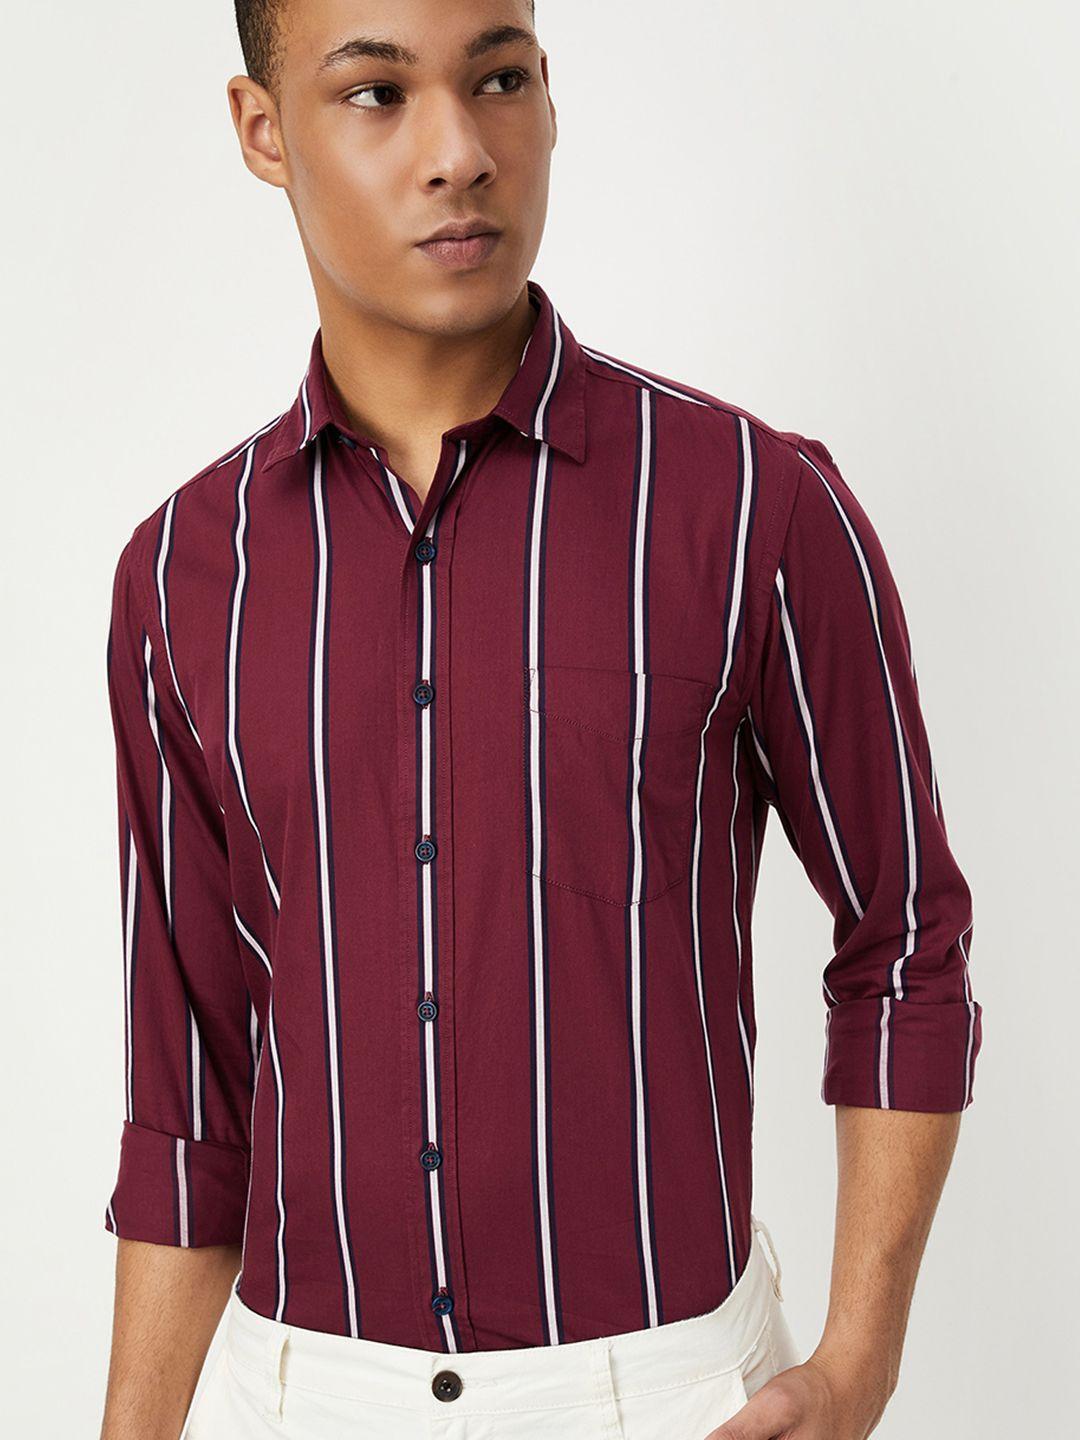 max-vertical-striped-spread-collar-pure-cotton-casual-shirt